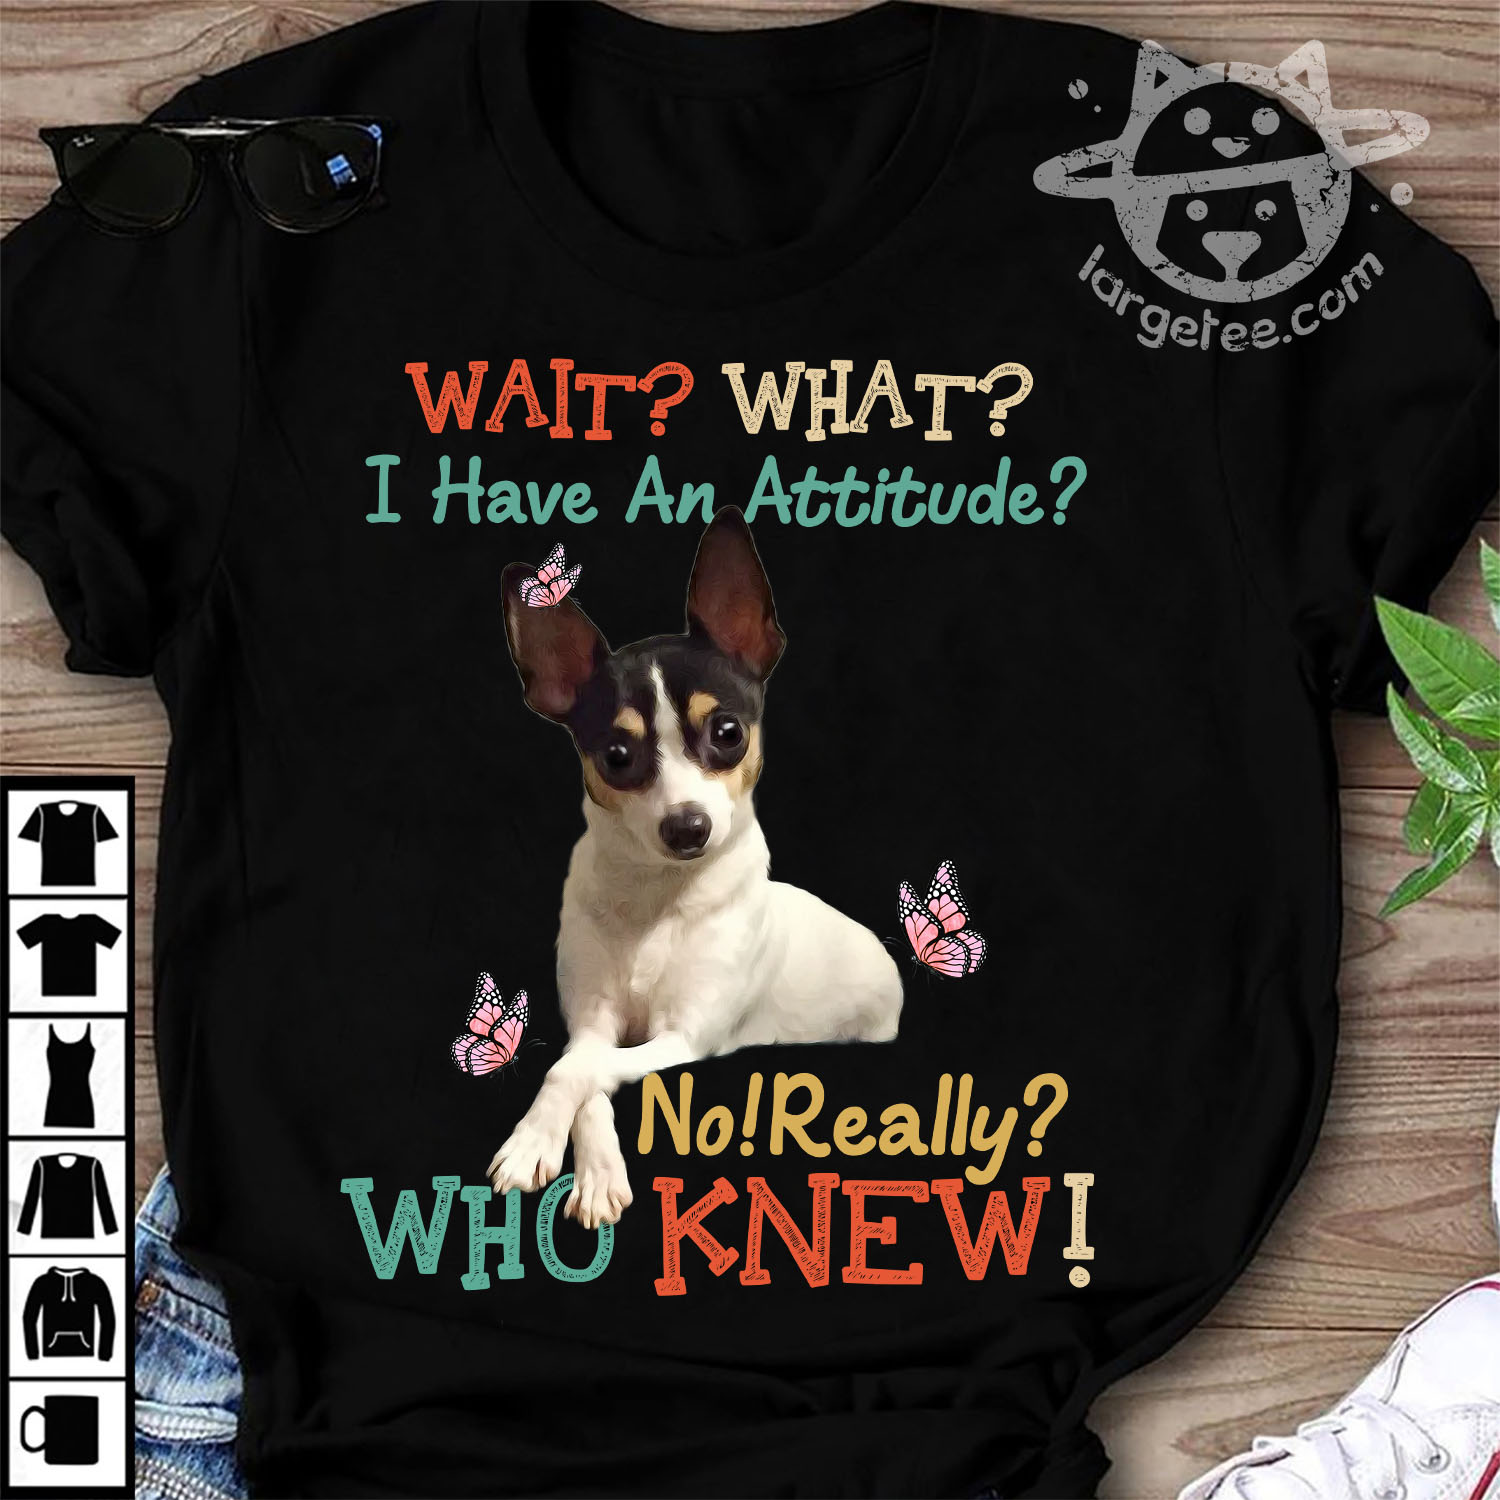 I have an attitude - Chihuahua dog attitude, dog lover